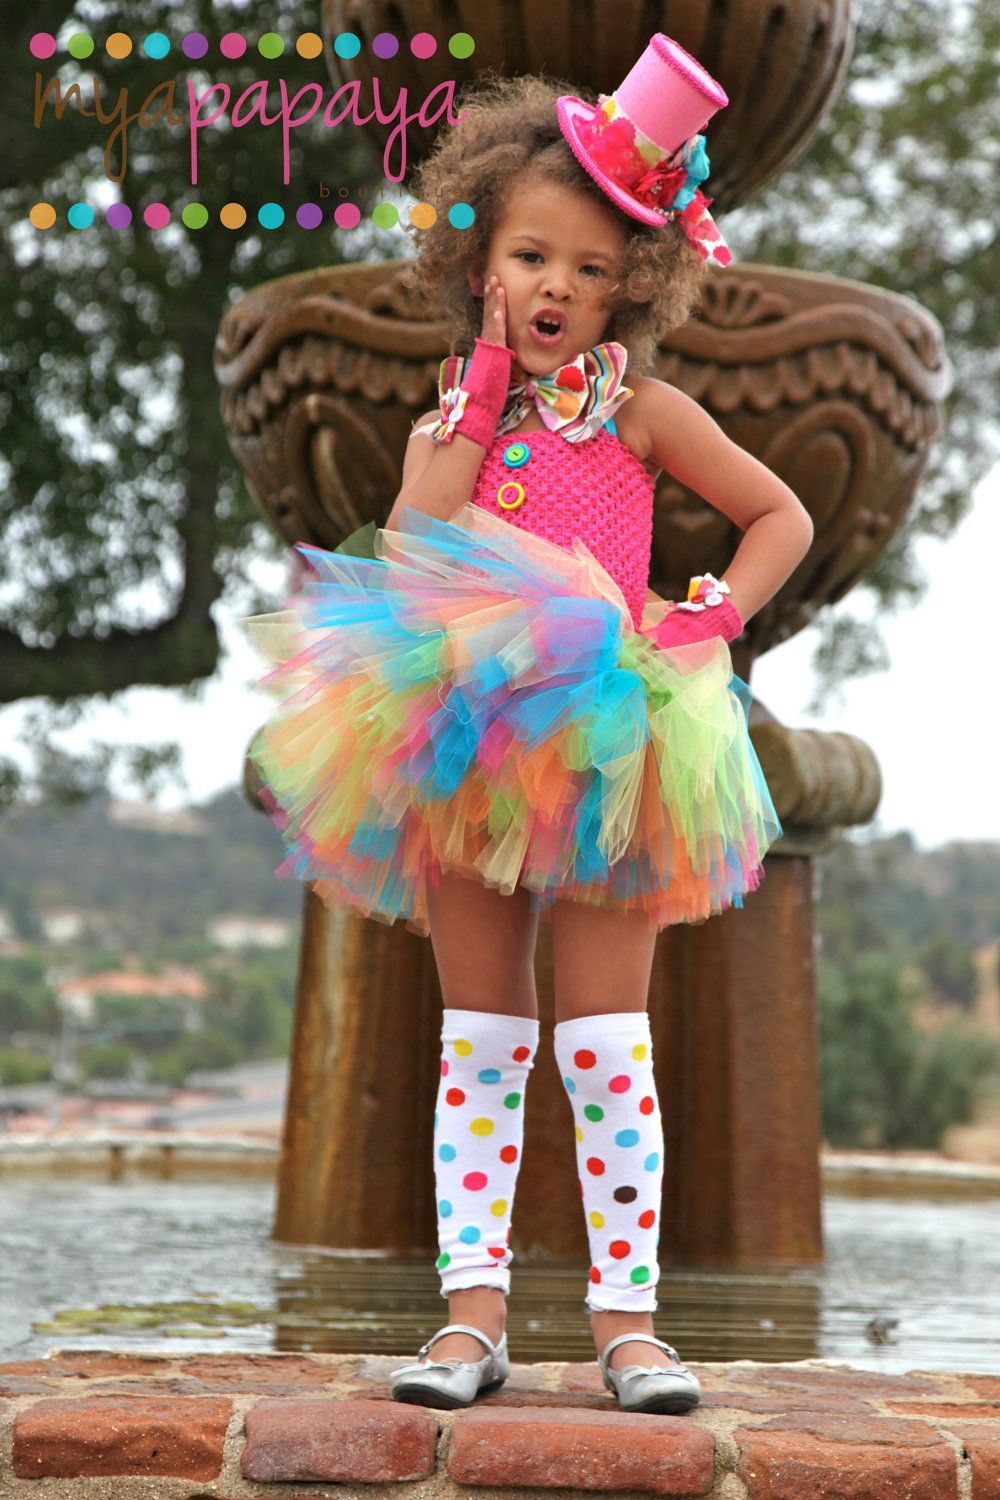 Mad Hatter Costume Tutu Dress 12months-5t  Alice in Wonderland, Tea Party Halloween Costume. $65.00, via Etsy.